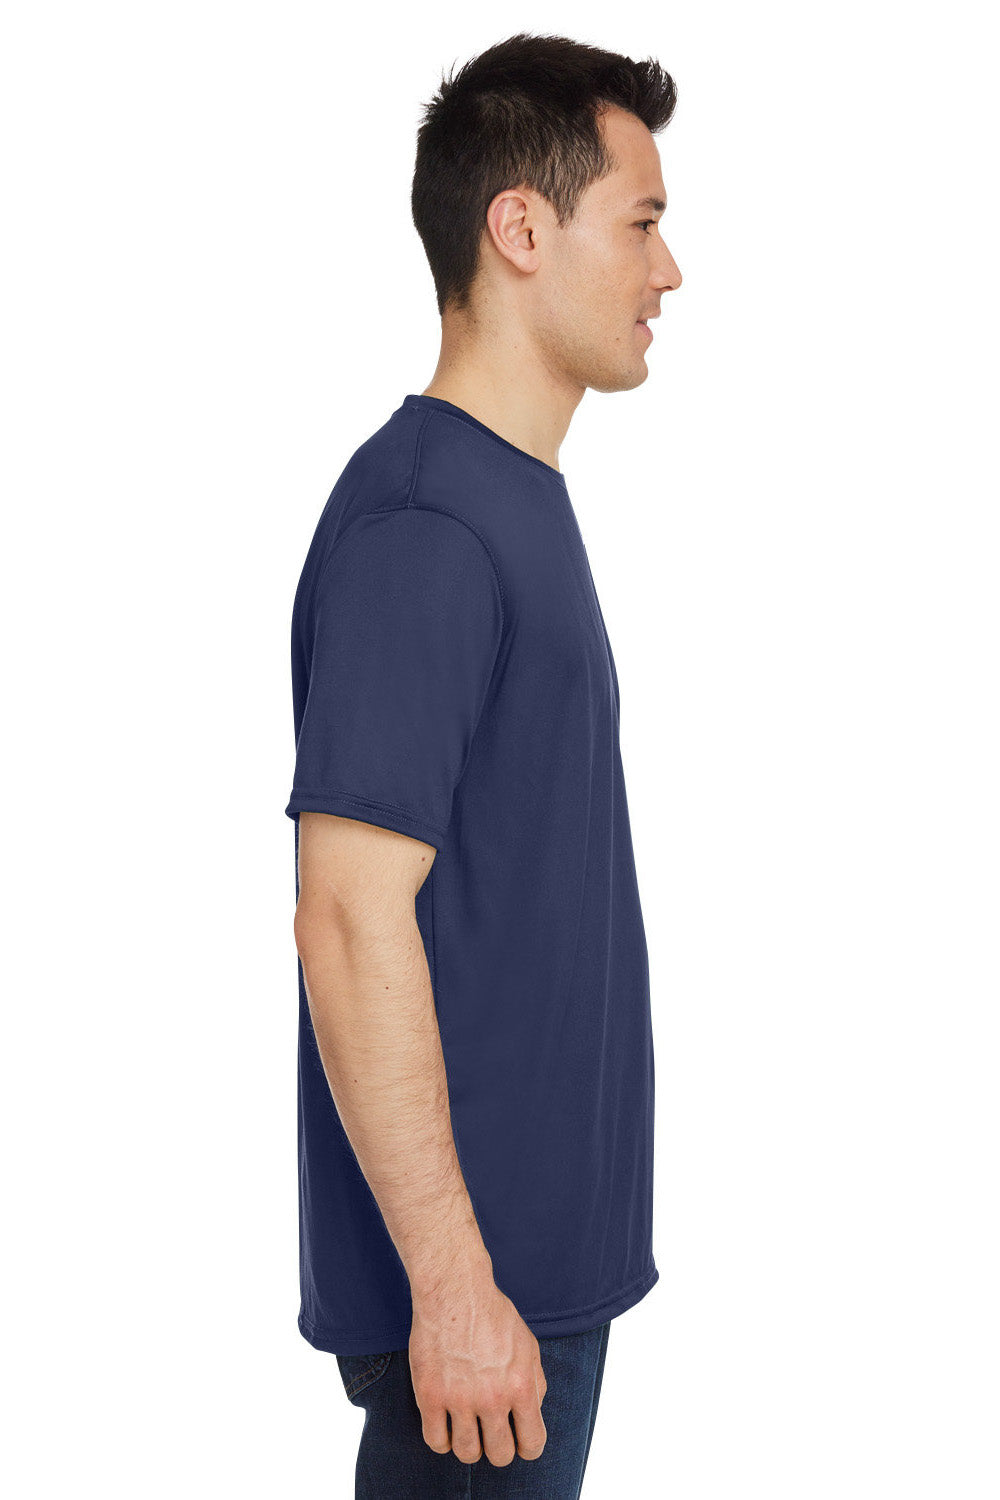 Under Armour 1376842 Mens Team Tech Moisture Wicking Short Sleeve Crewneck T-Shirt Midnight Navy Blue Model Side